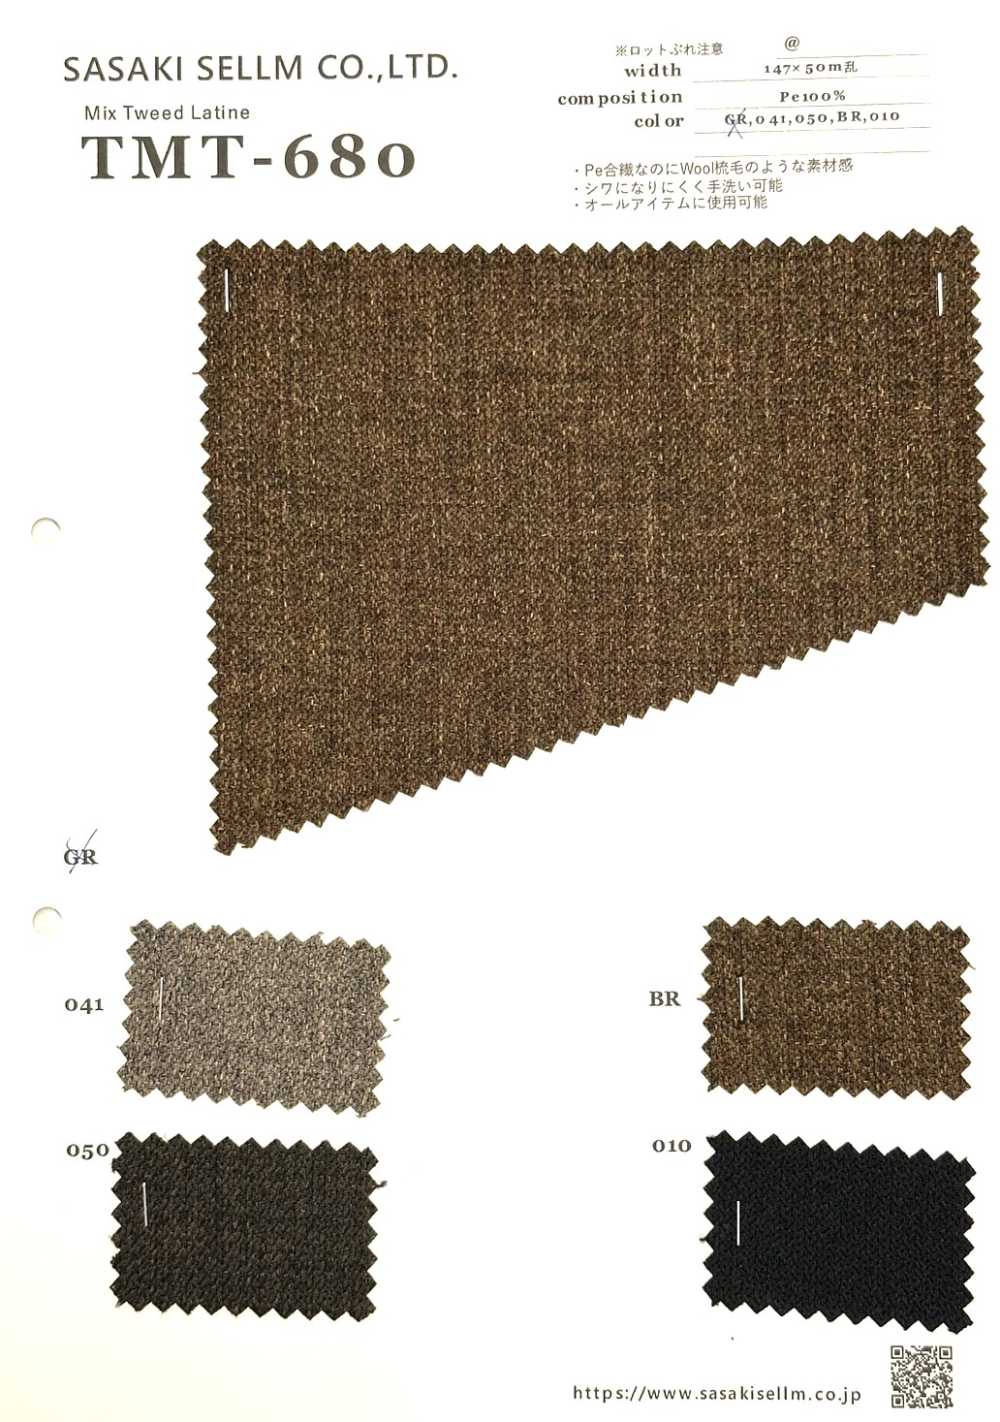 TMT-680 Ratchin De Tweed Mixto[Fabrica Textil] SASAKISELLM